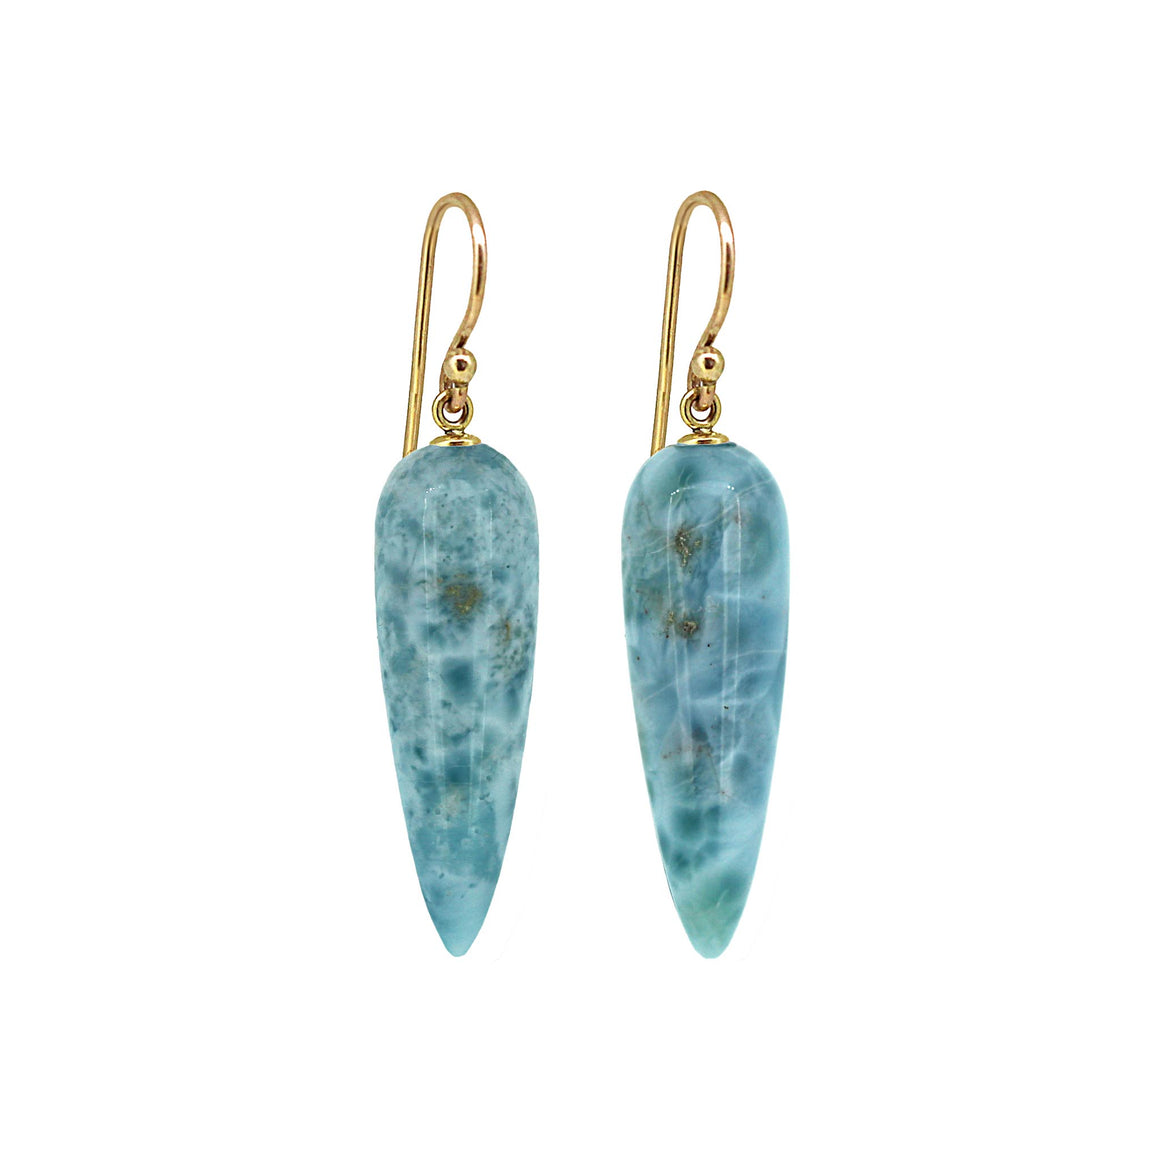 Larimar Pendulum earrings blue tones on yellow gold hooks